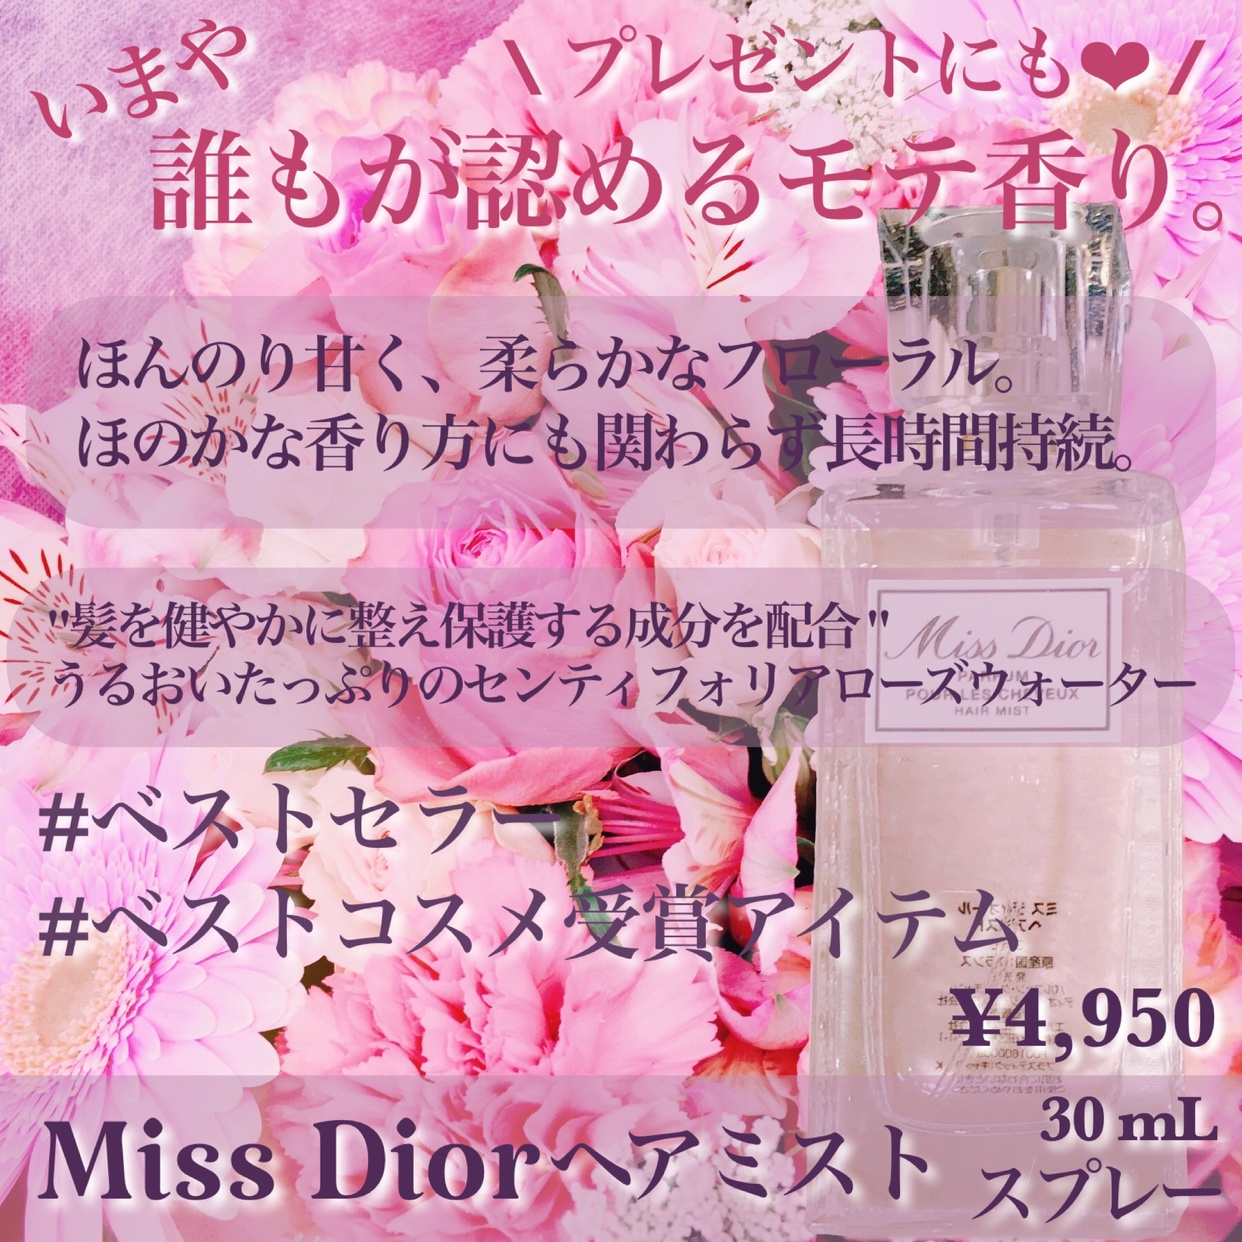 Dior(ディオール) ミス ディオール ヘアミストの良い点・メリットに関するsatomiさんの口コミ画像2